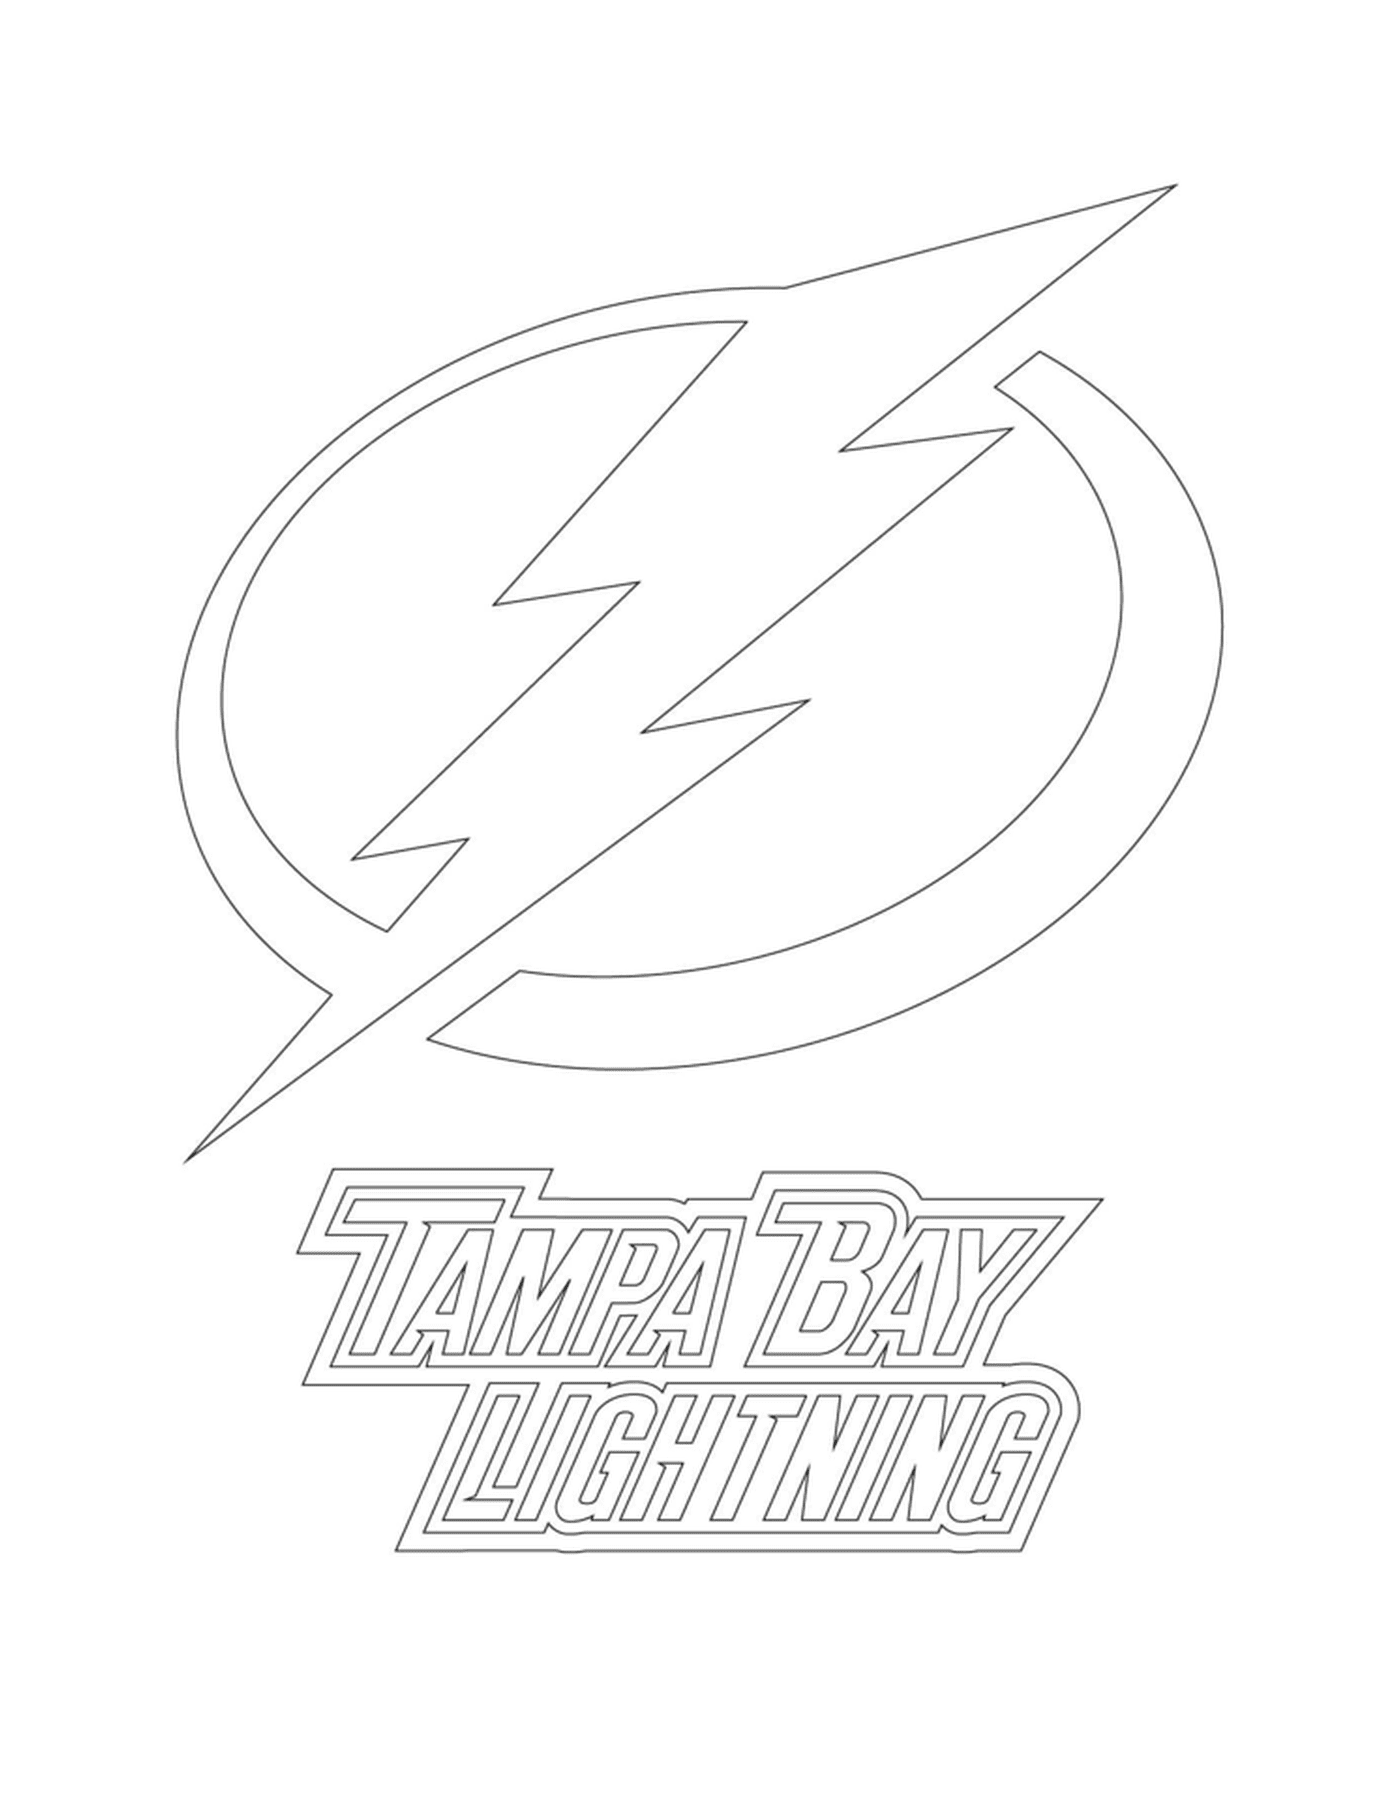   Logo des Lightning de Tampa Bay 